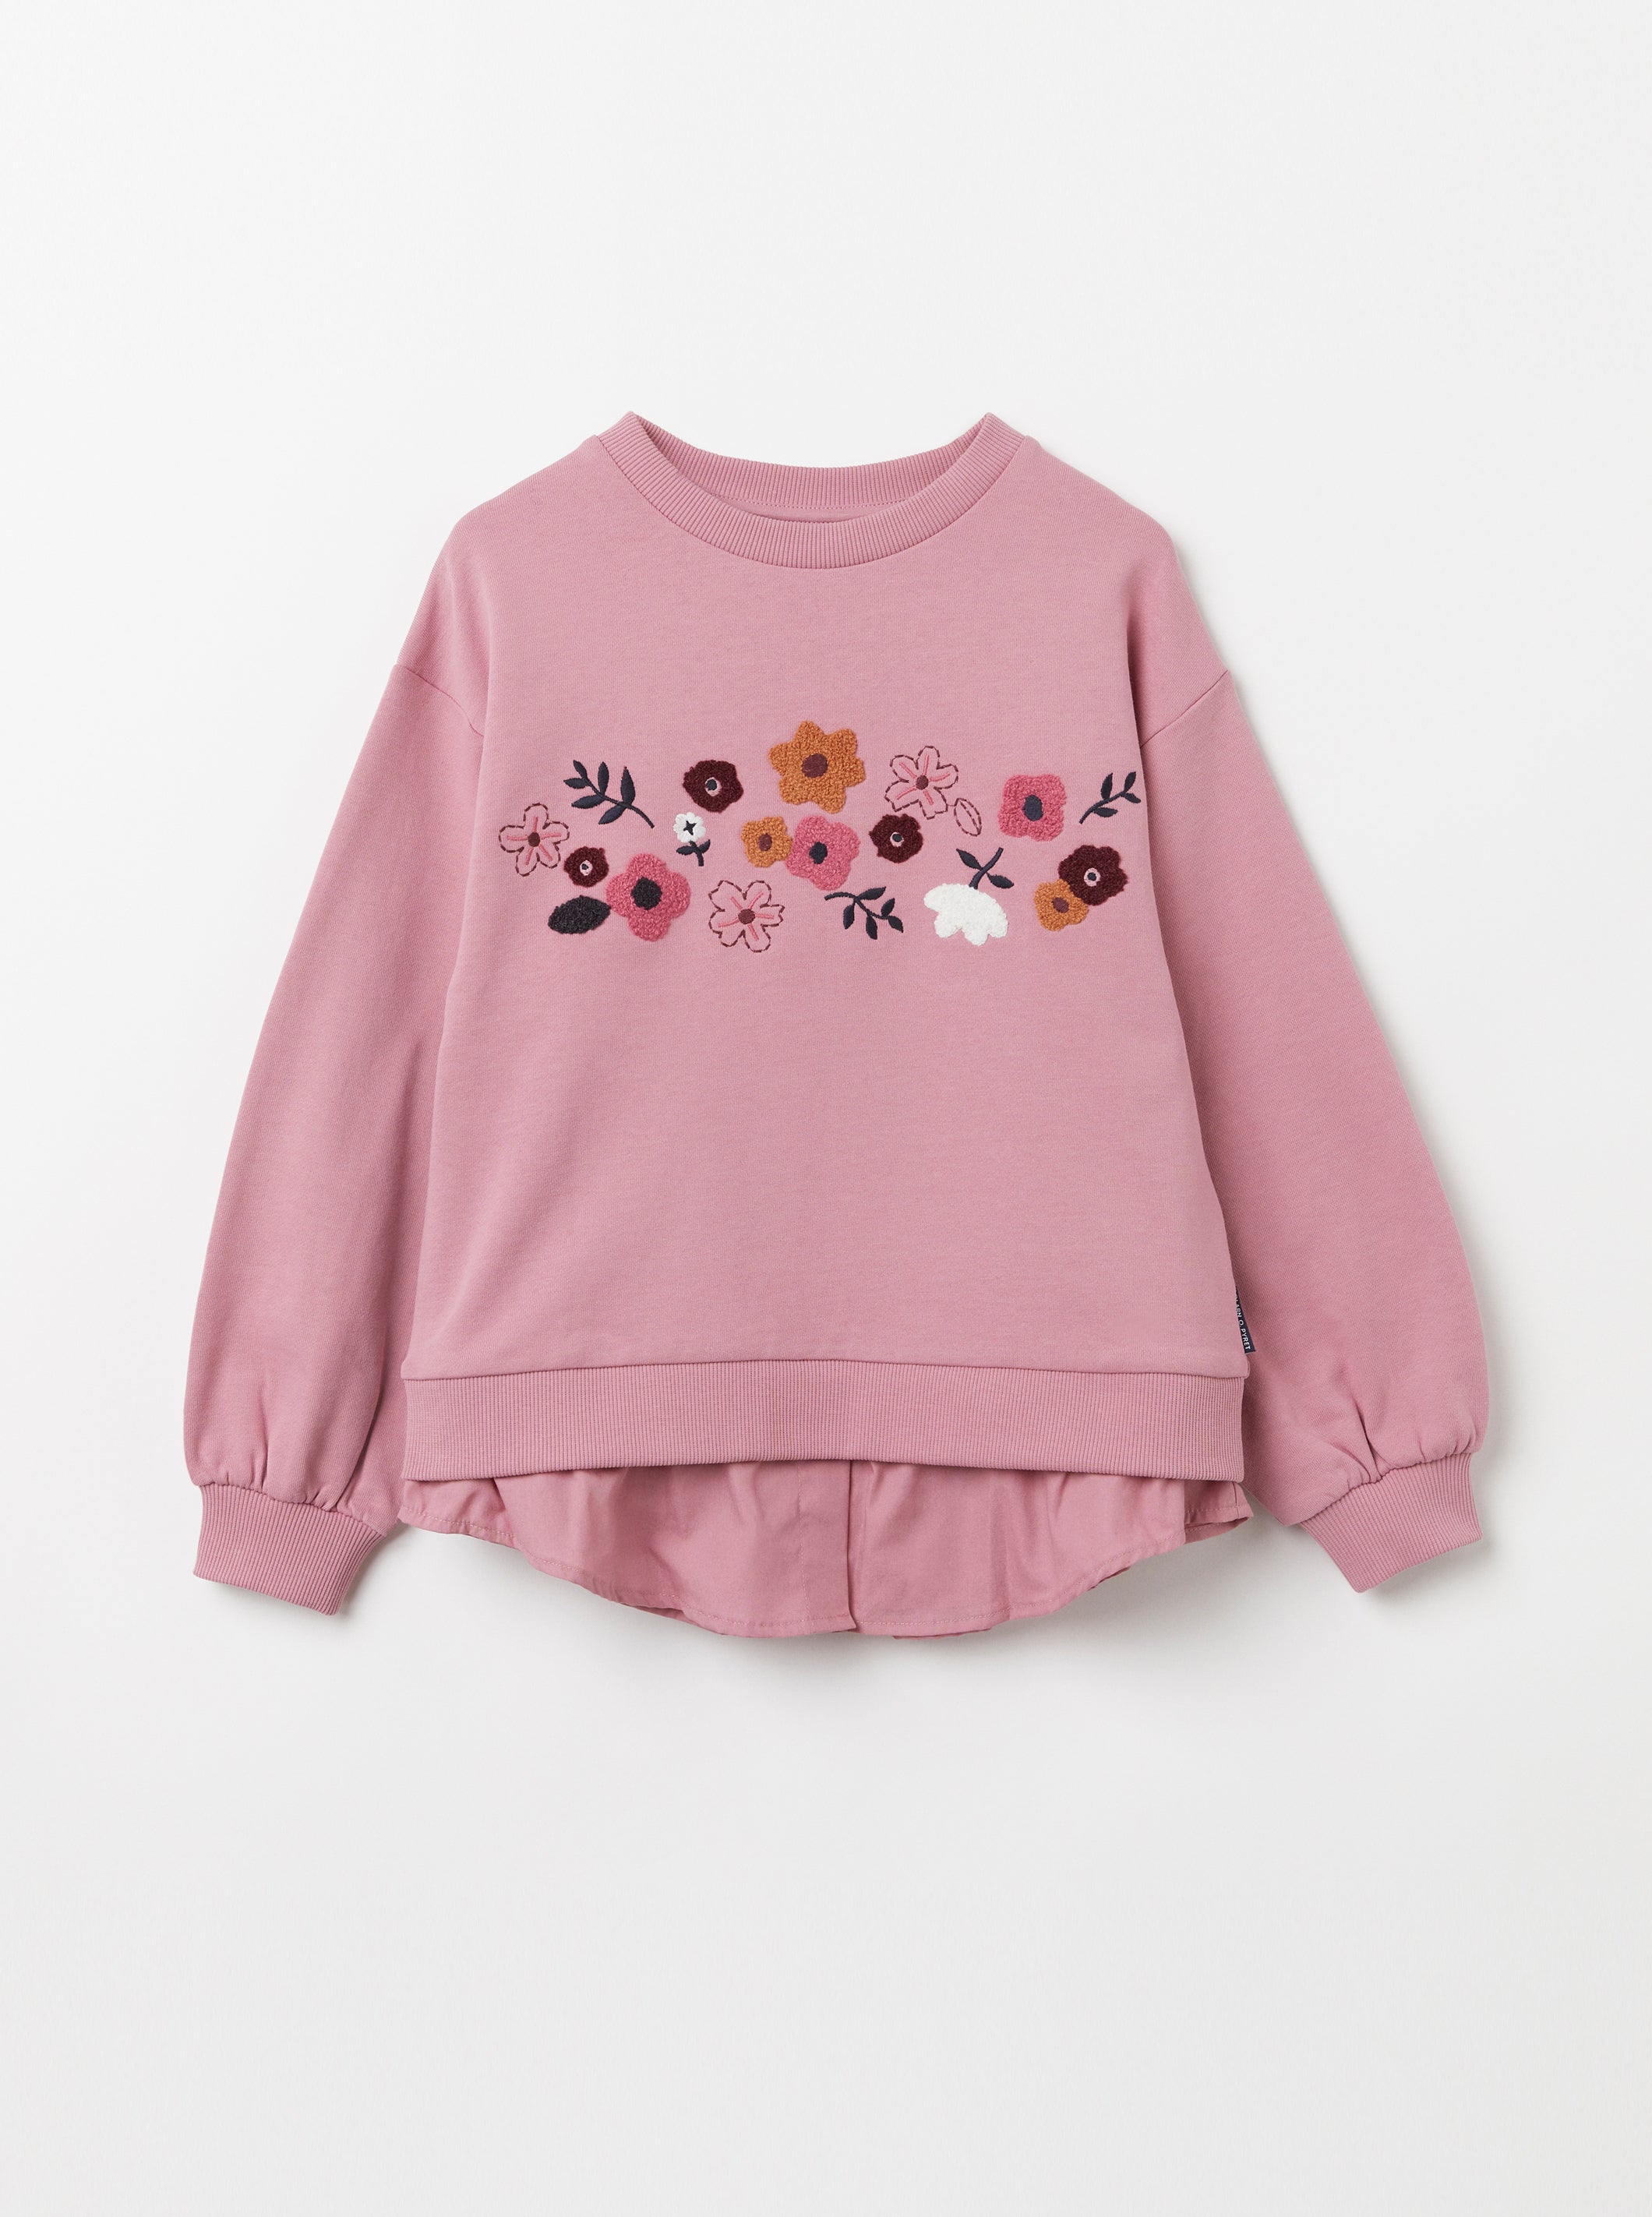 Floral Embroidered Kids Sweatshirt